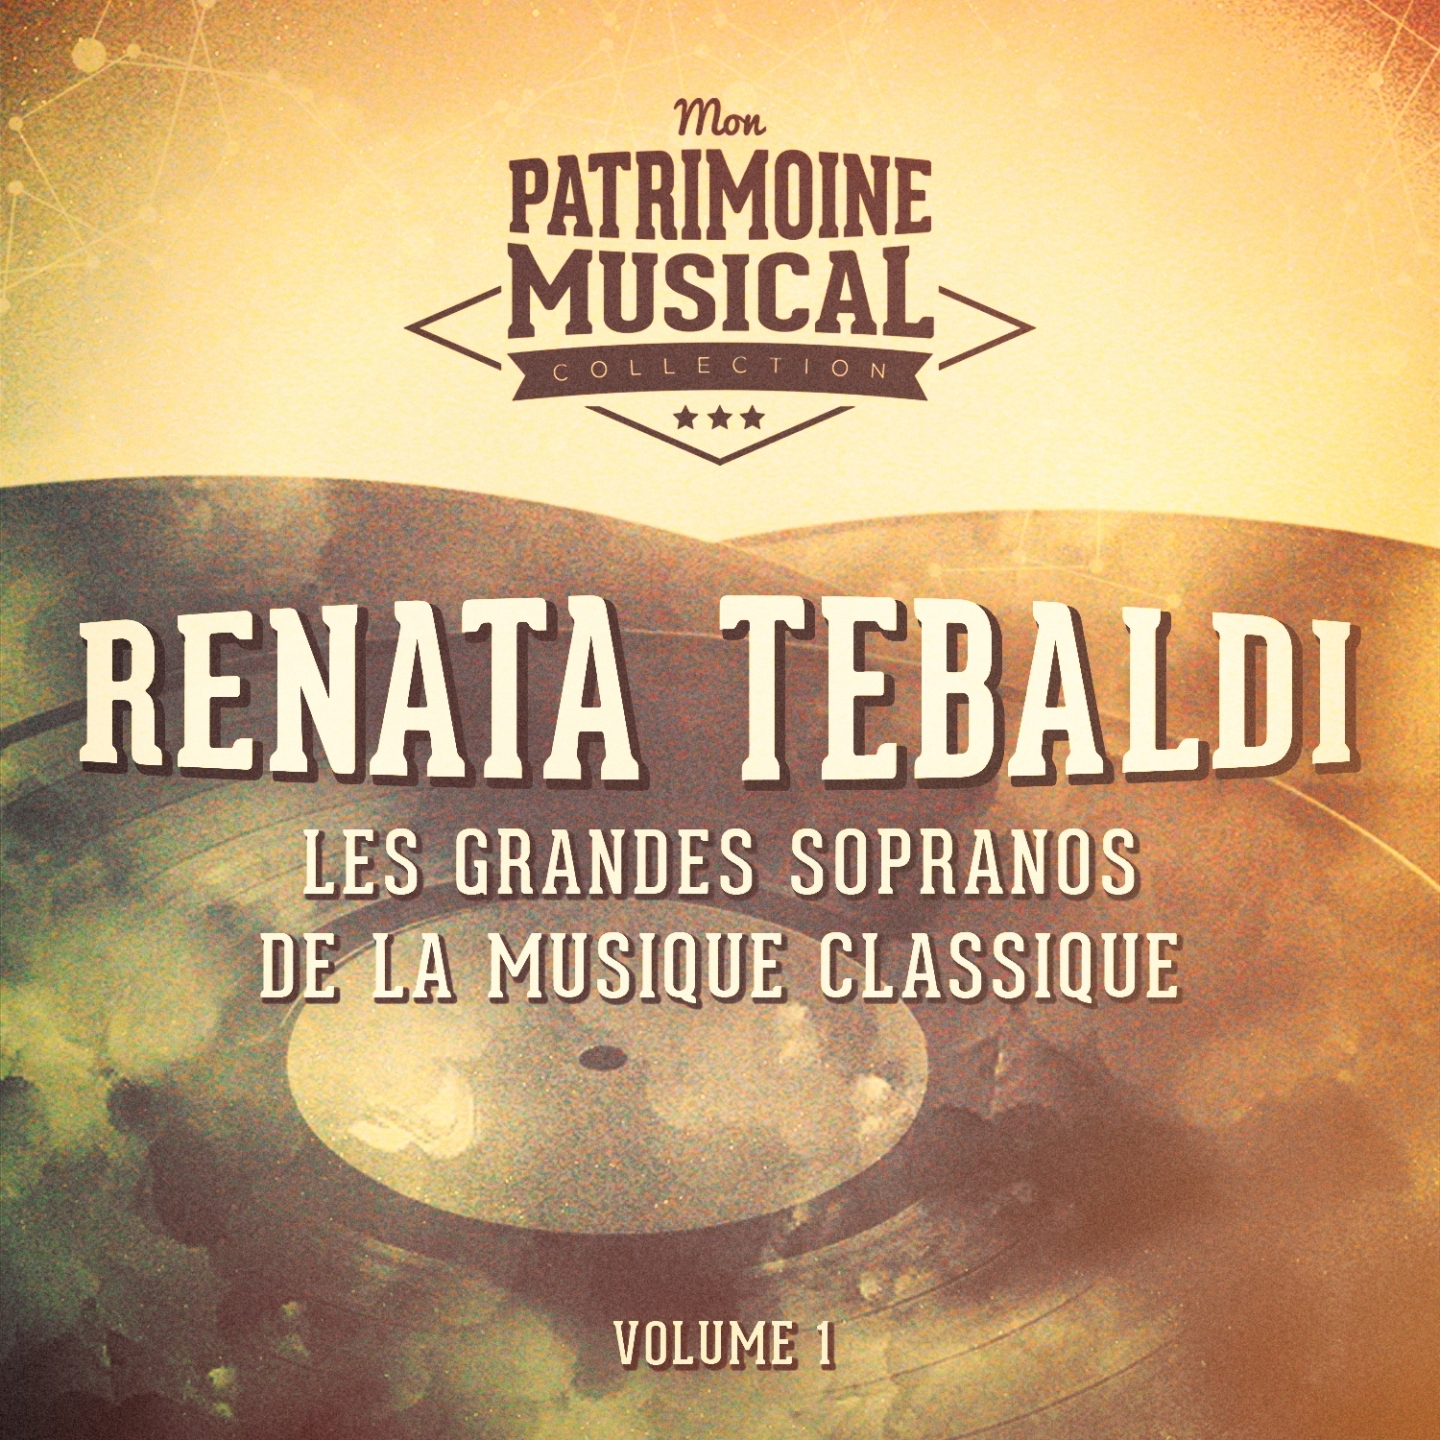 Les grandes sopranos de la musique classique : Renata Tebaldi, Vol. 1